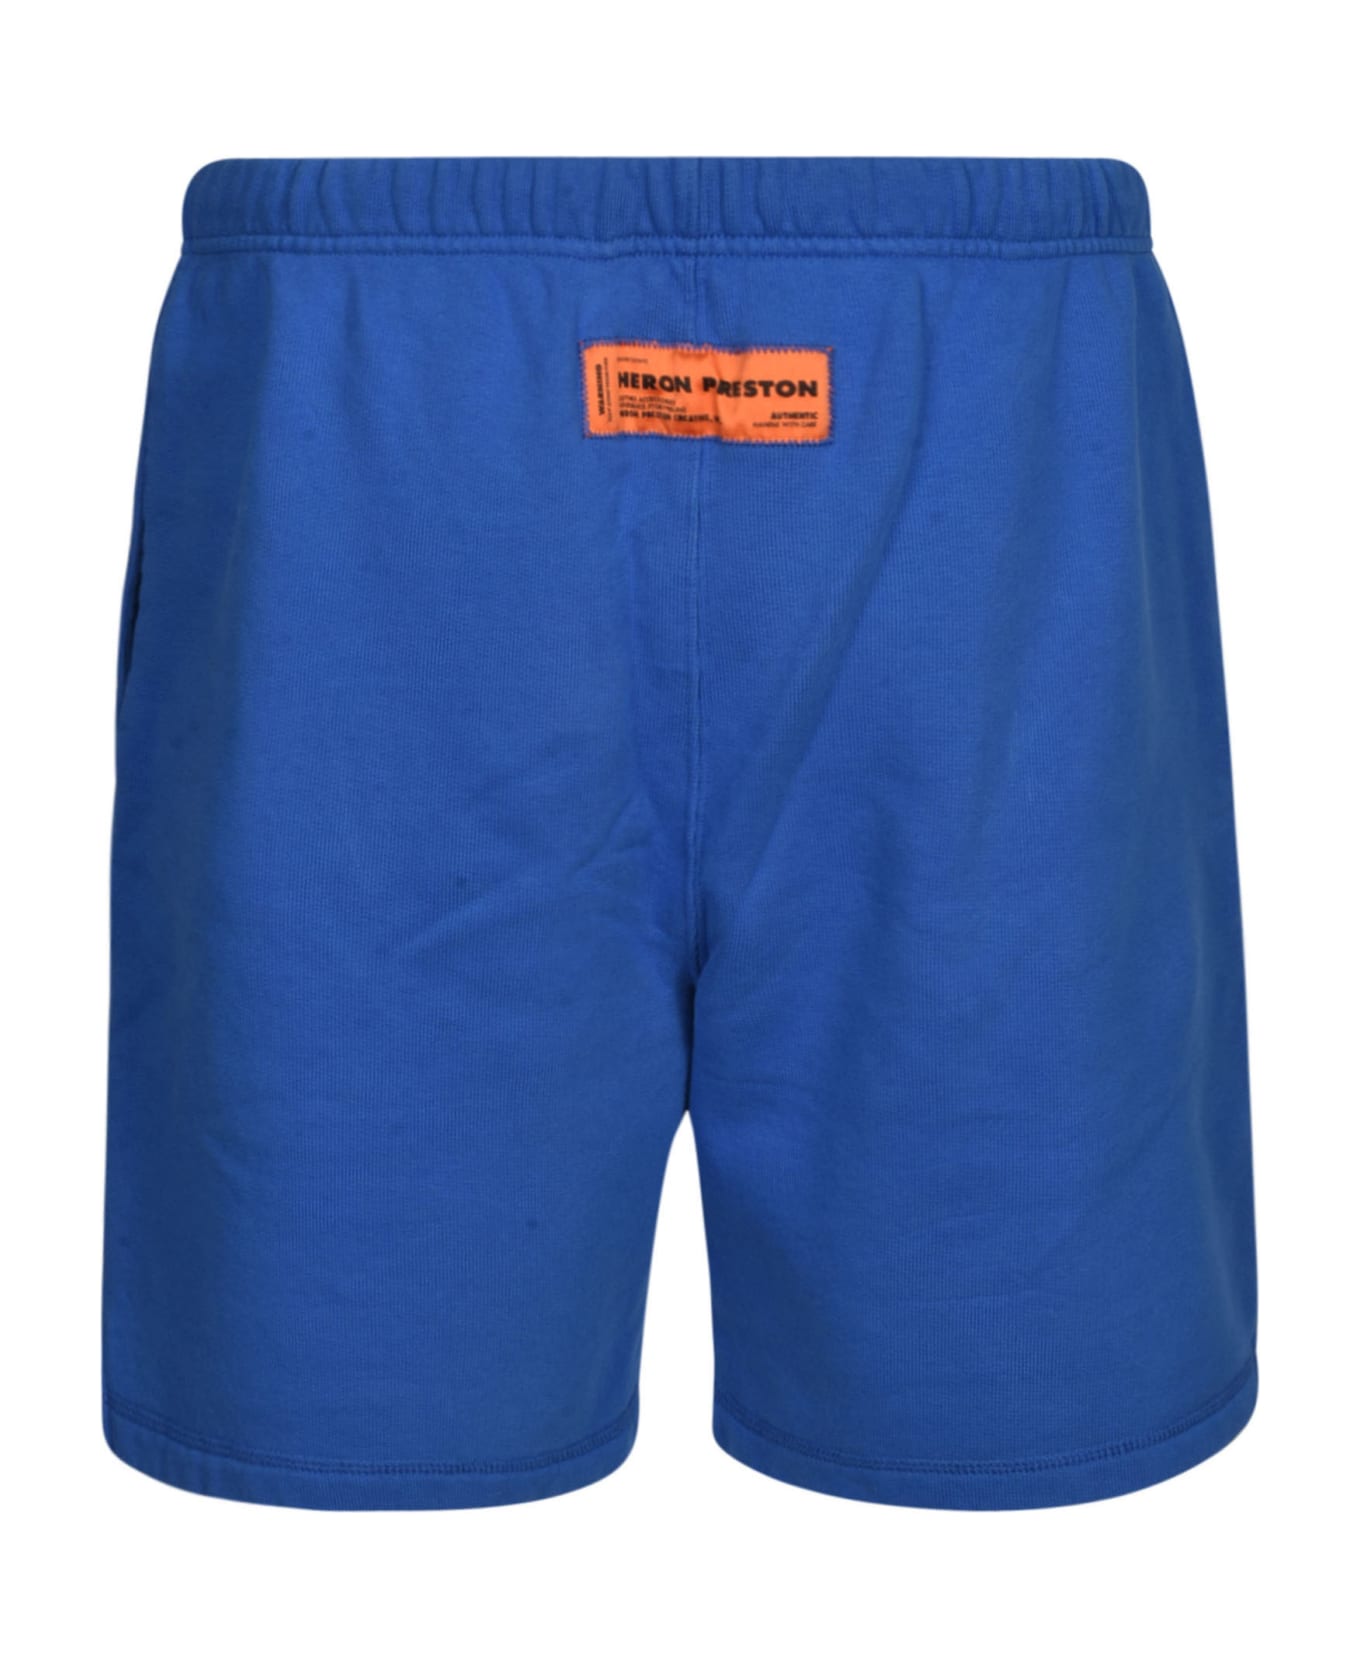 HERON PRESTON 'hpny' Cotton Shorts - BLUE